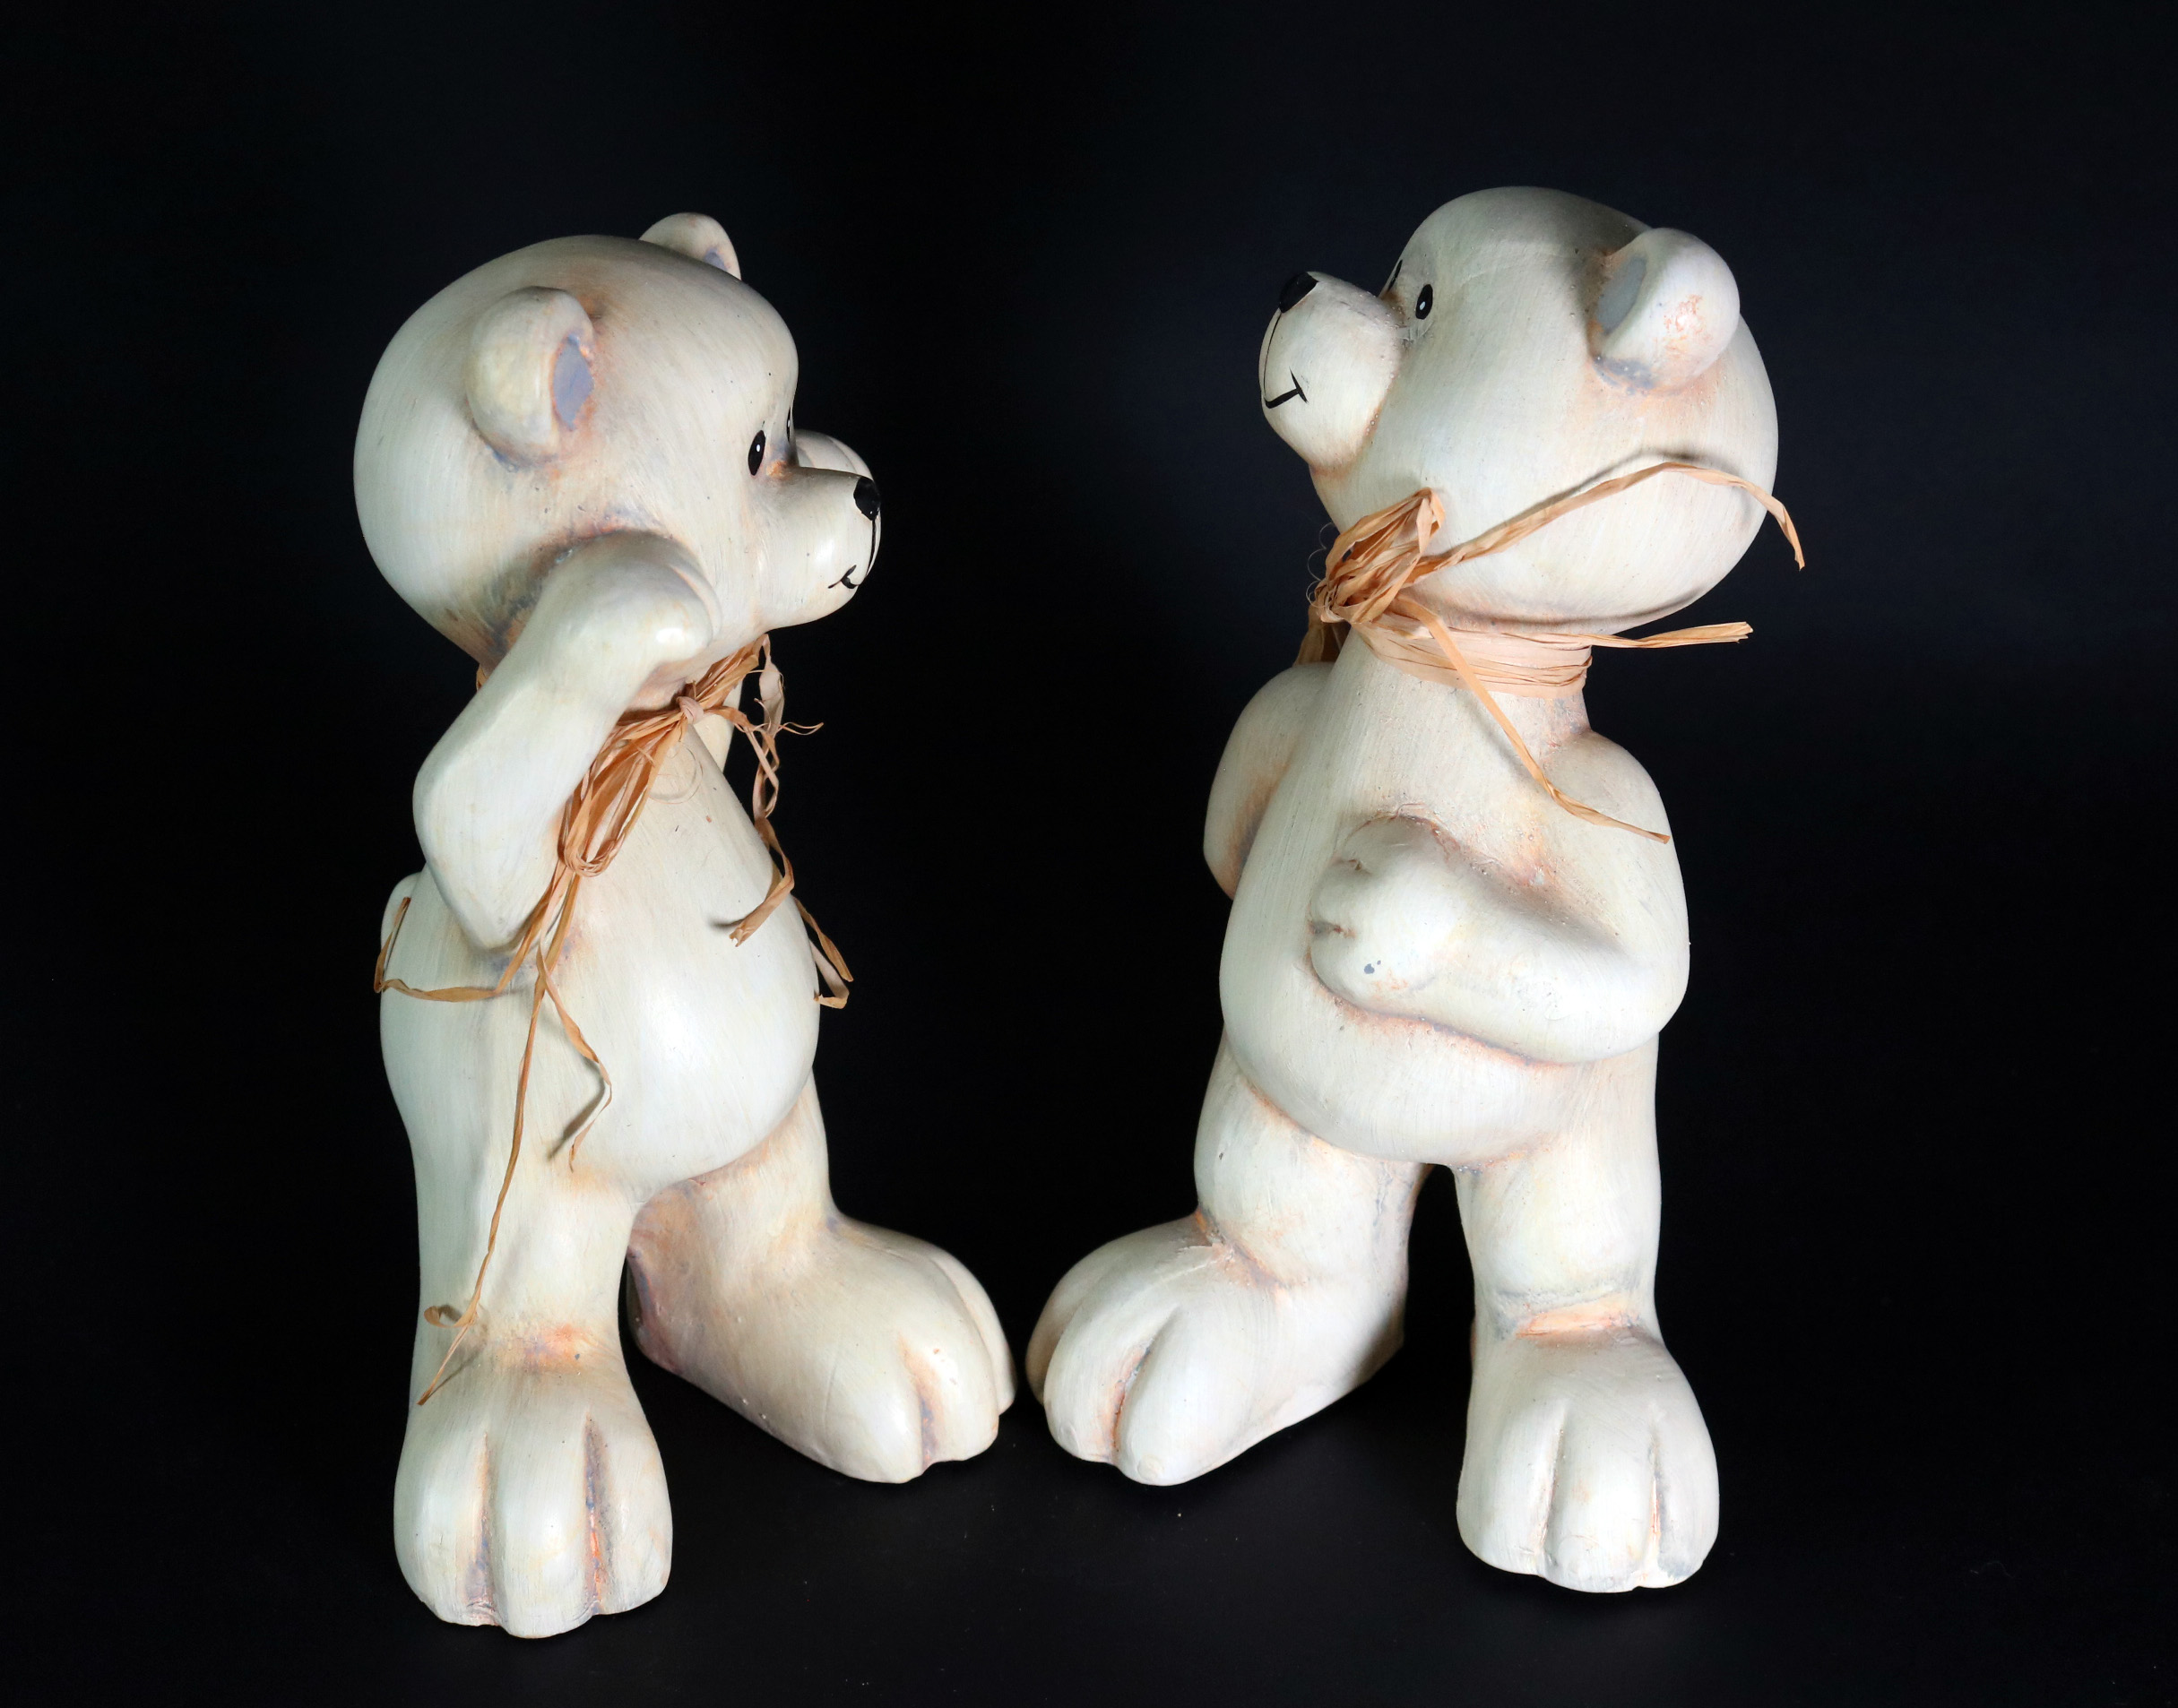 Ceramic Souvenir Bears